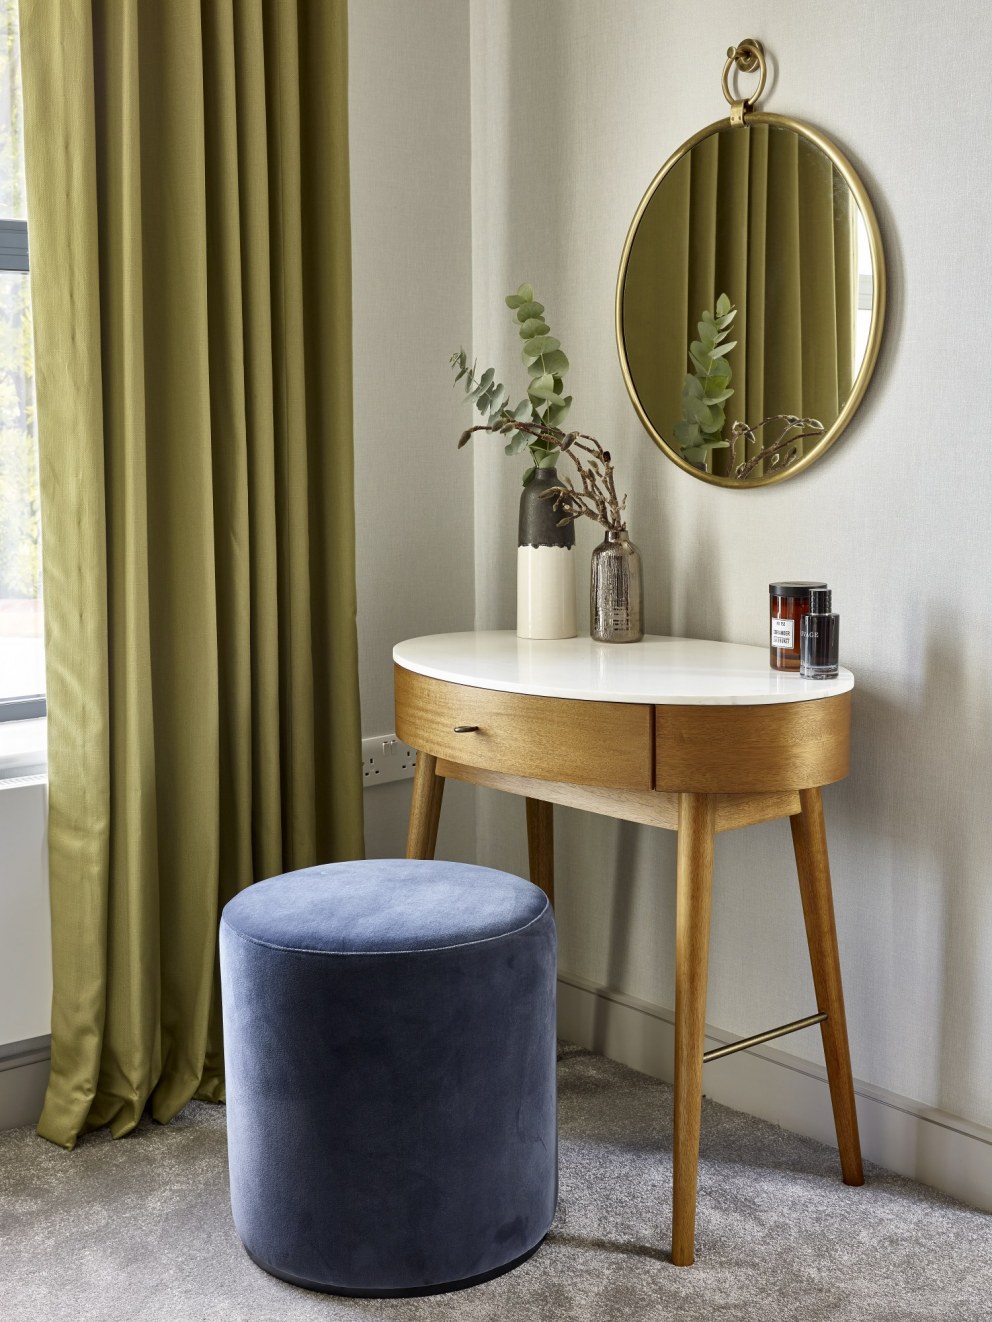 West London Riverside Home  | Guest bedroom dressing table area | Interior Designers